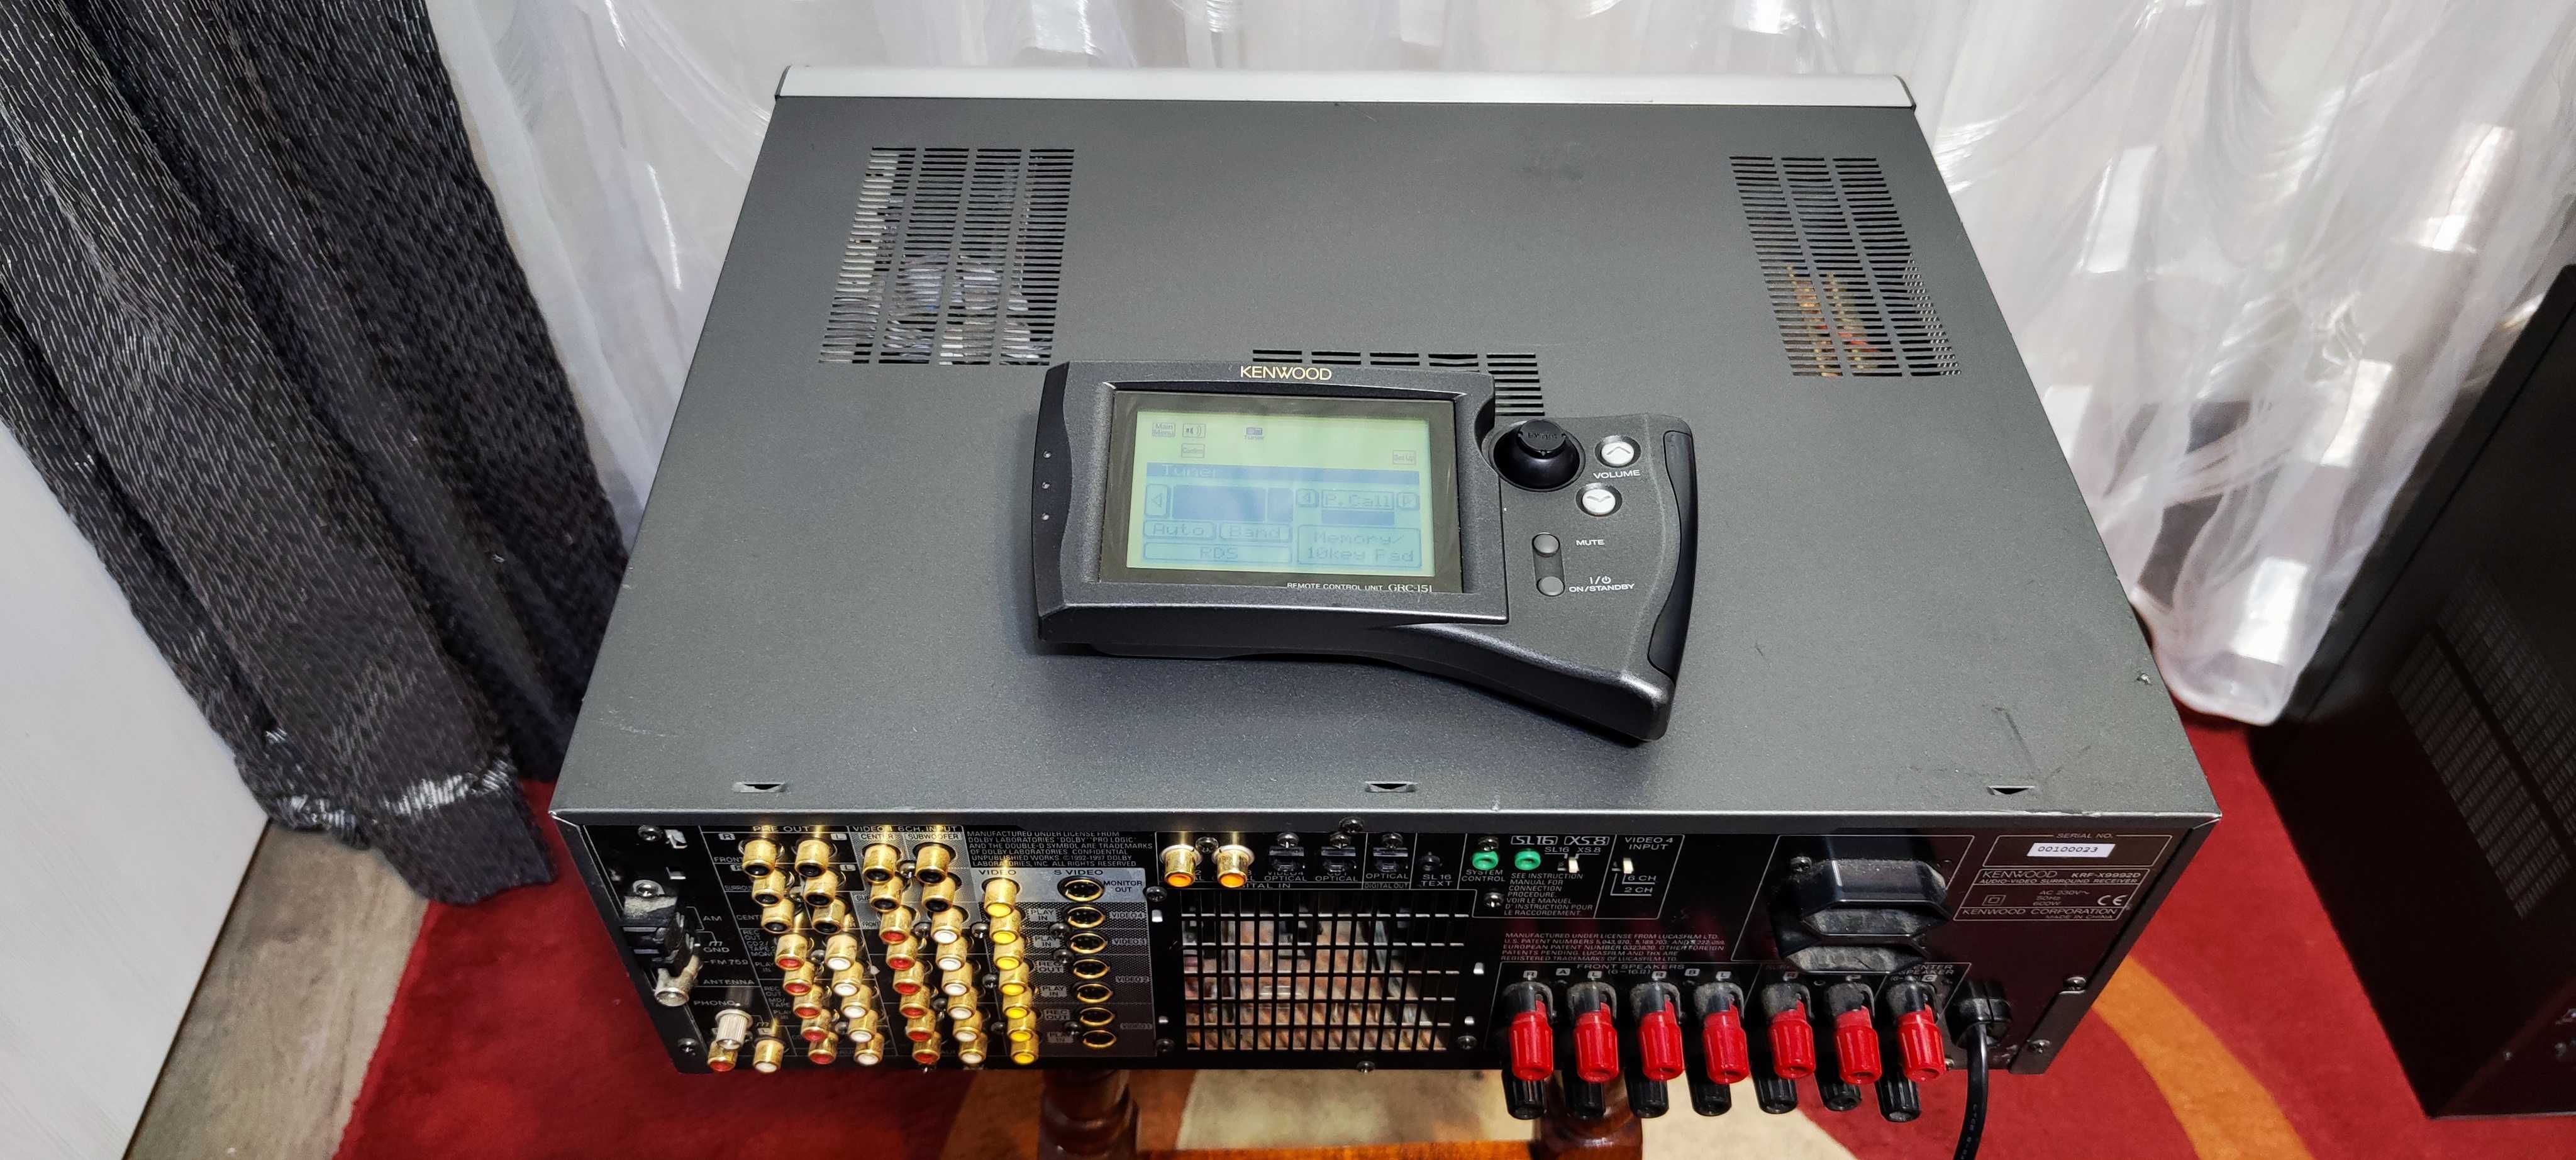 Amplificator Kenwood KRF-X9992D Statie Amplituner Telecomanda GRC-151